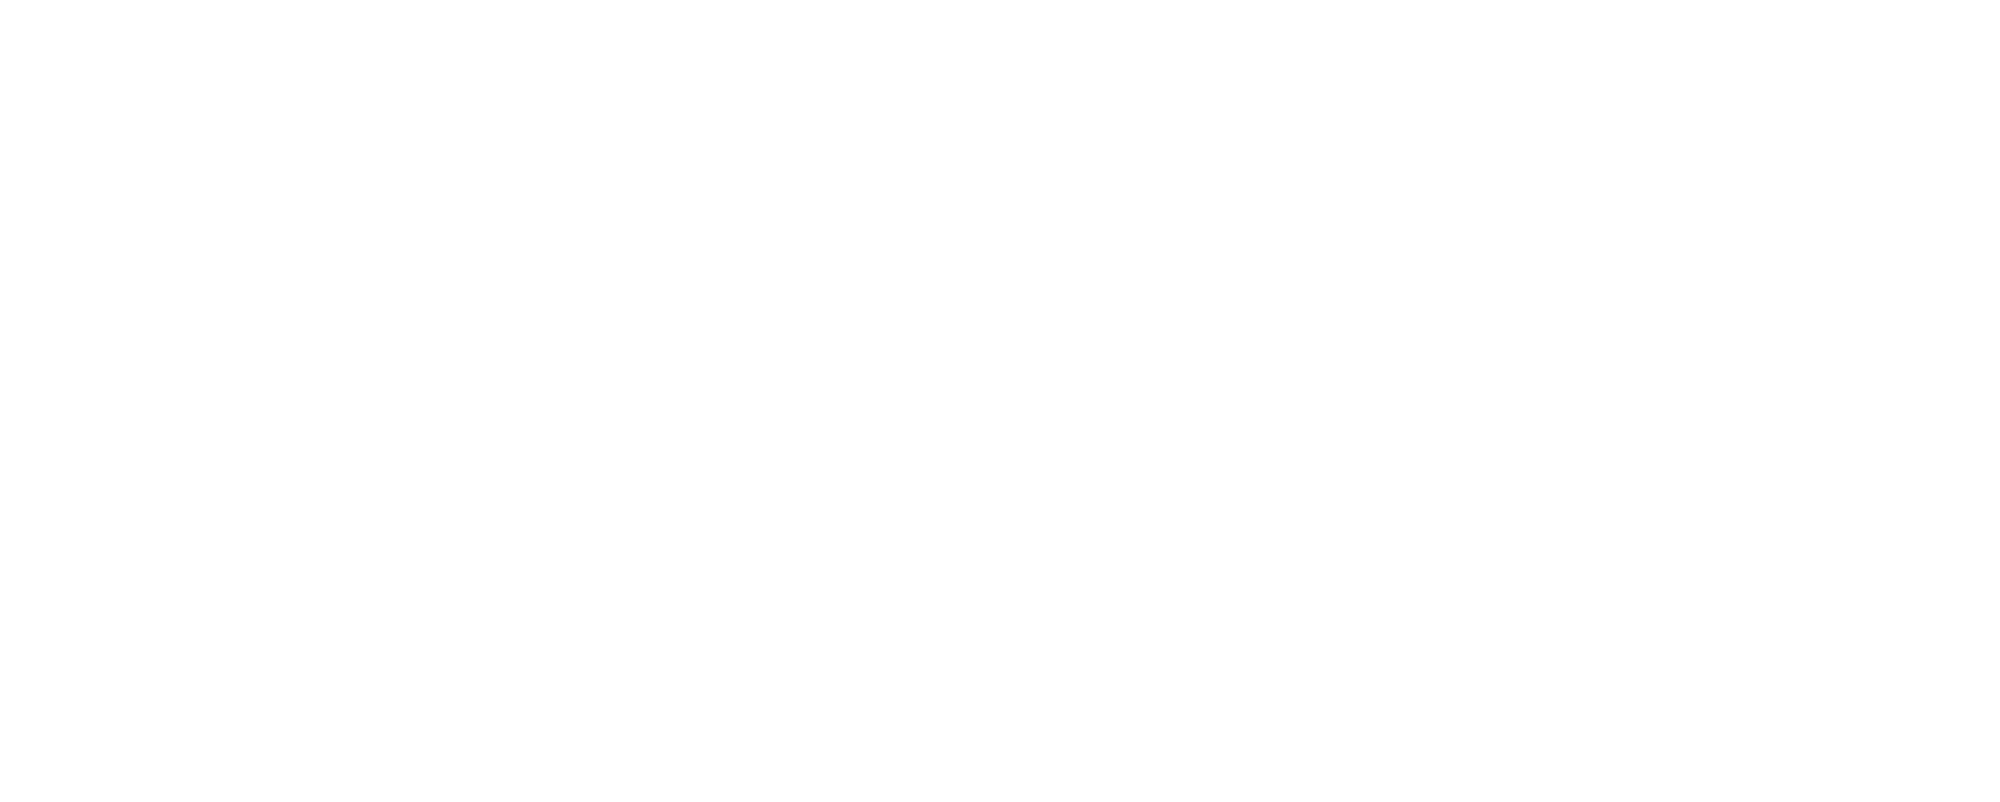 G-Rank Challenge Seoul WINNER